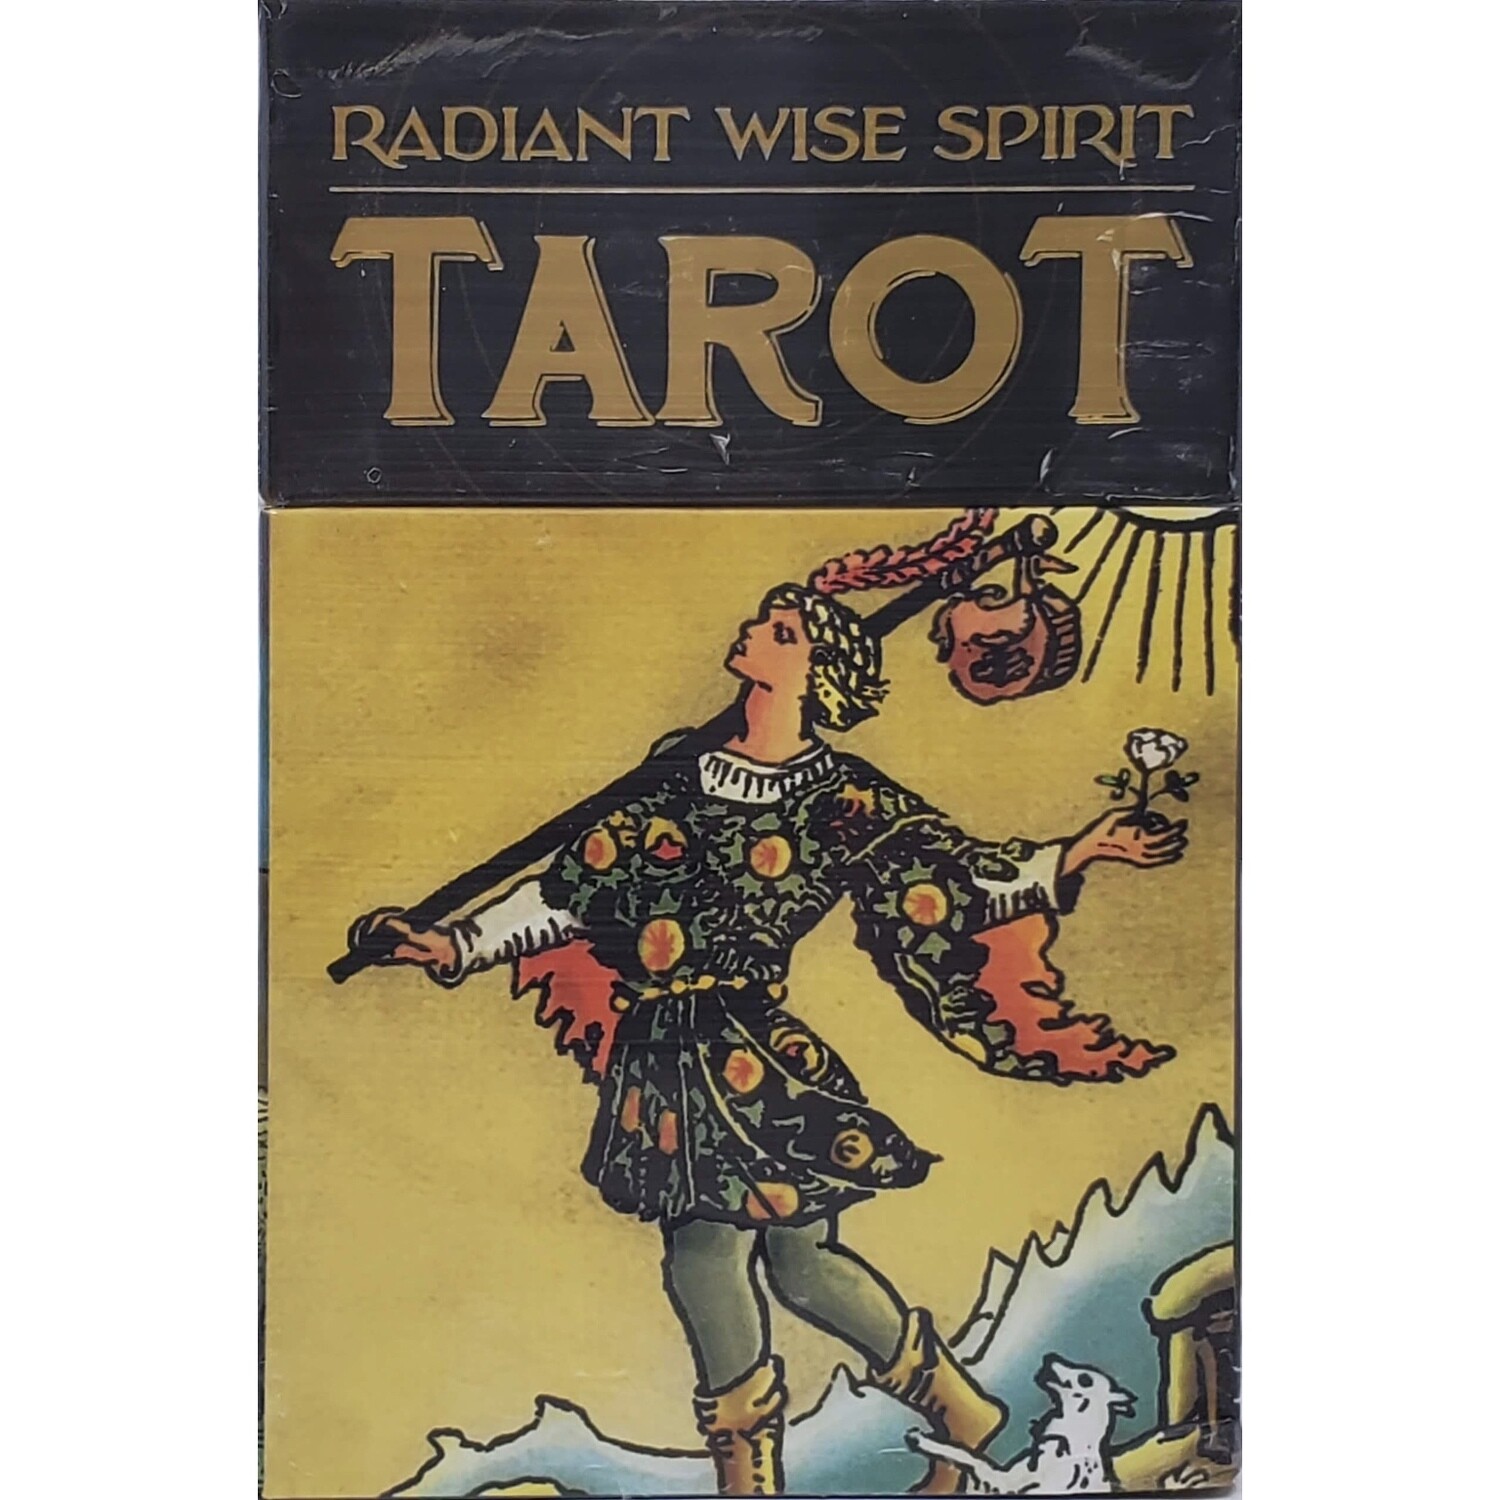 RADIANT WISE SPIRIT TAROT